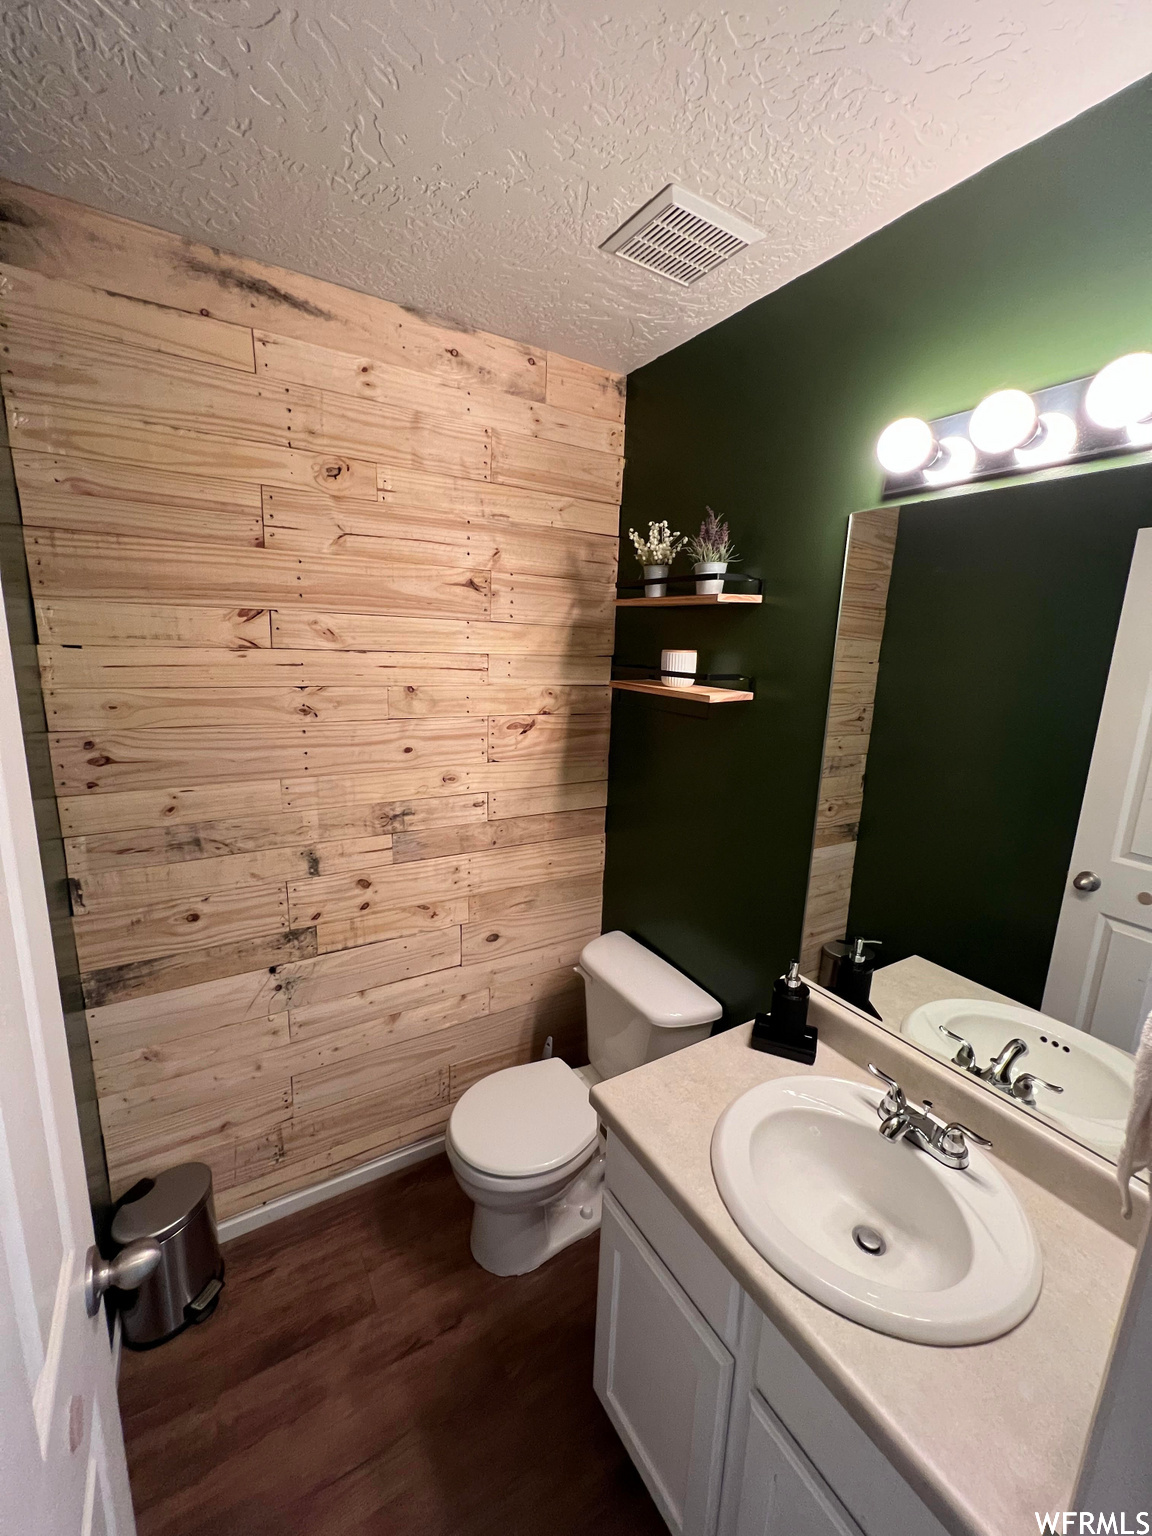 Bathroom with dark hardwood floors, a textured ceiling, mirror, vanity, and wooden walls